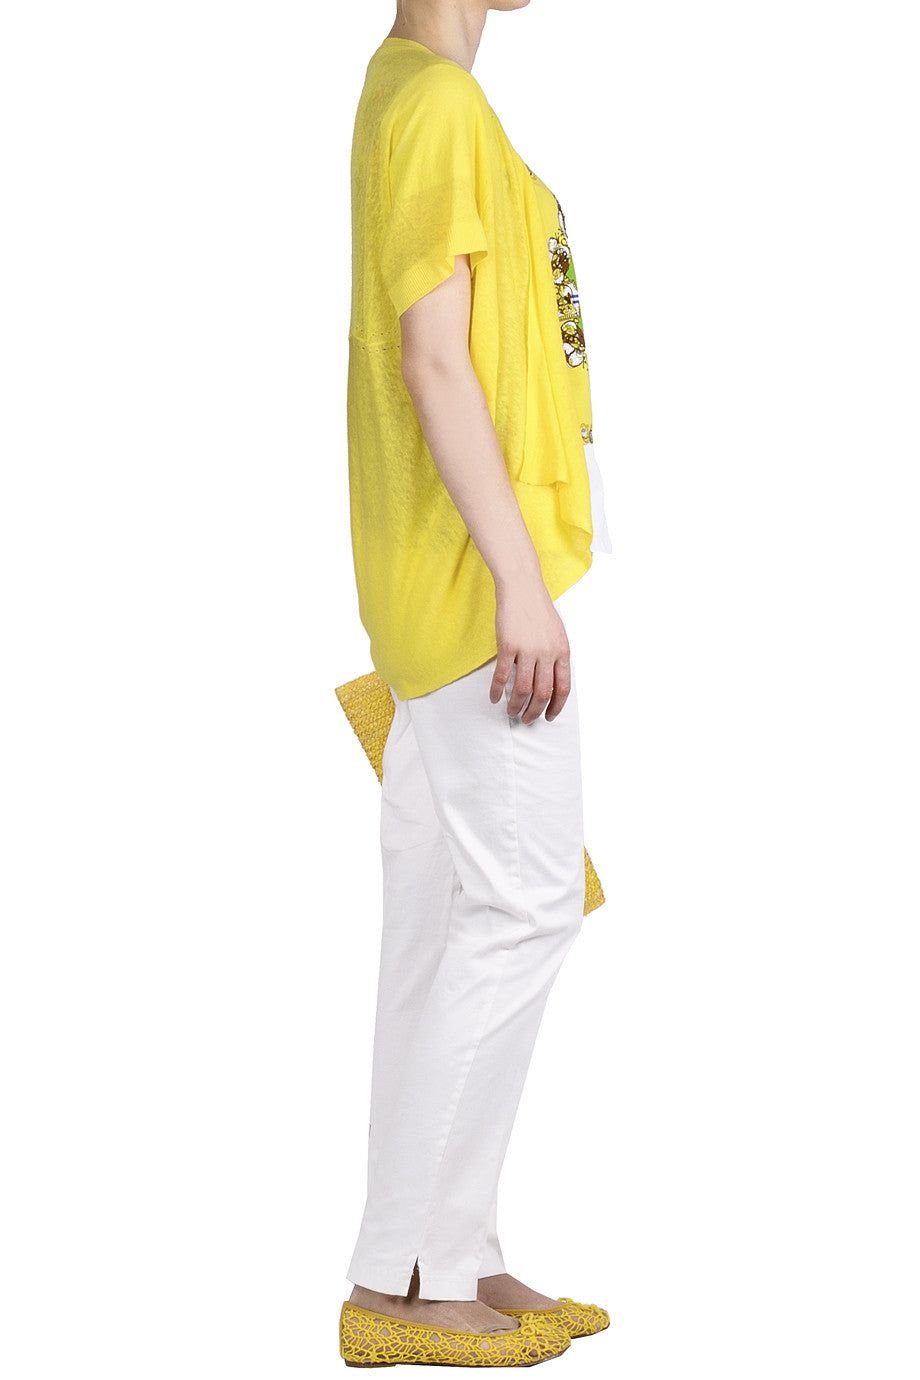 Kίτρινη Φωσφοριζέ Ζακέτα | Γυναικεία Ρούχα